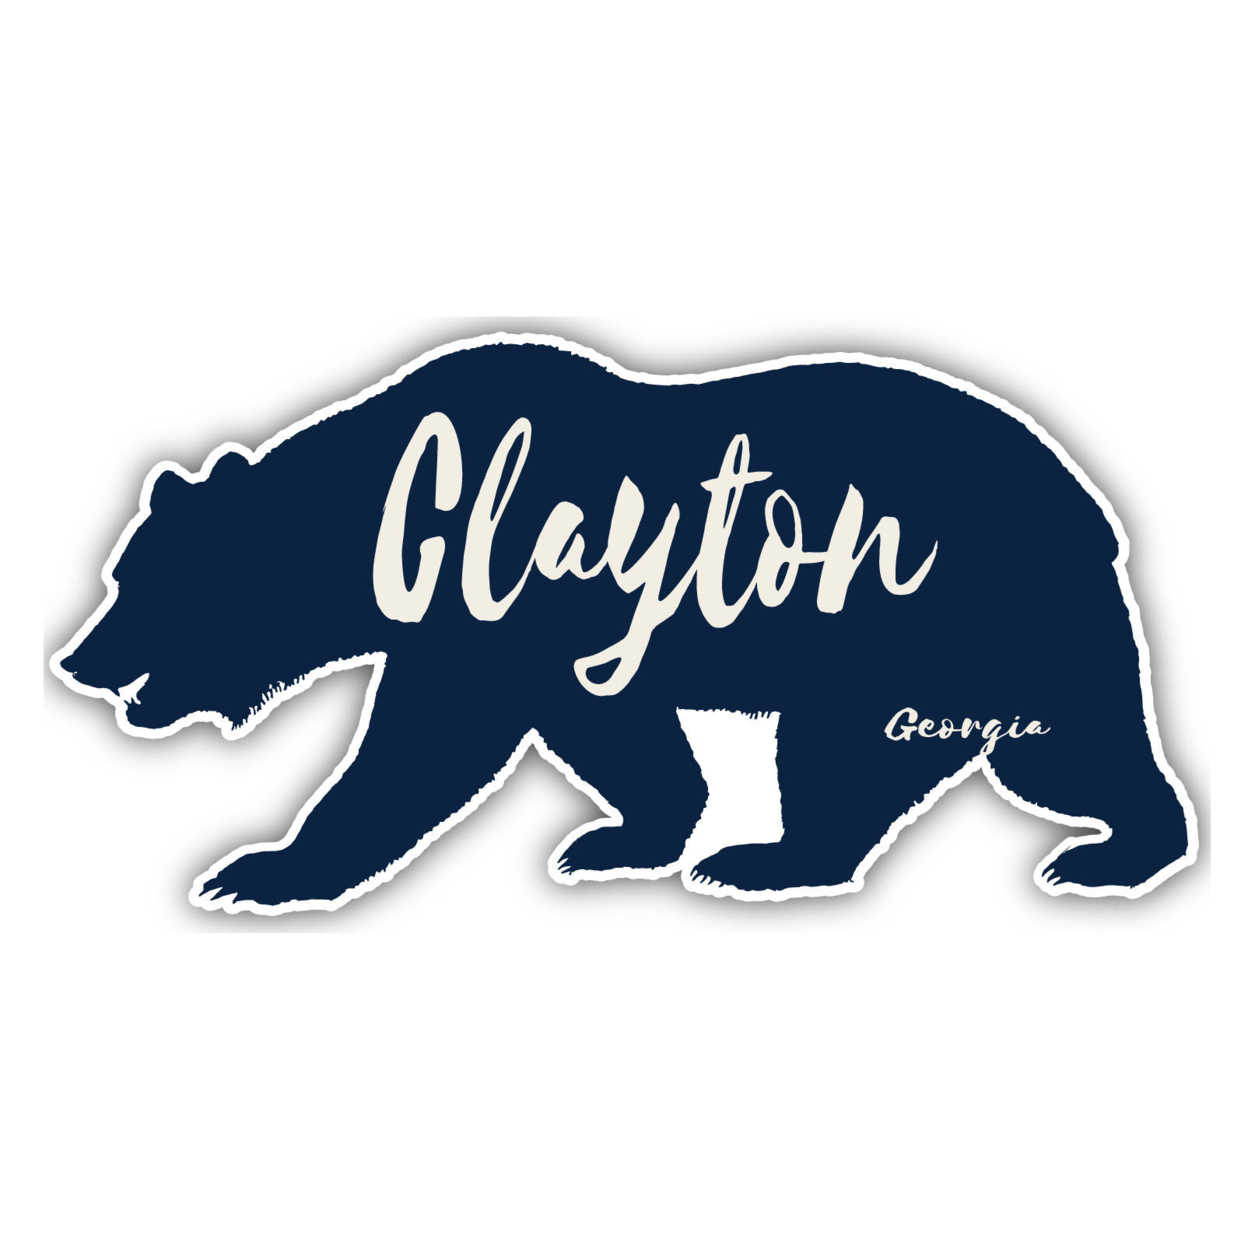 Clayton Georgia Souvenir Decorative Stickers (Choose Theme And Size) - 4-Pack, 2-Inch, Bear